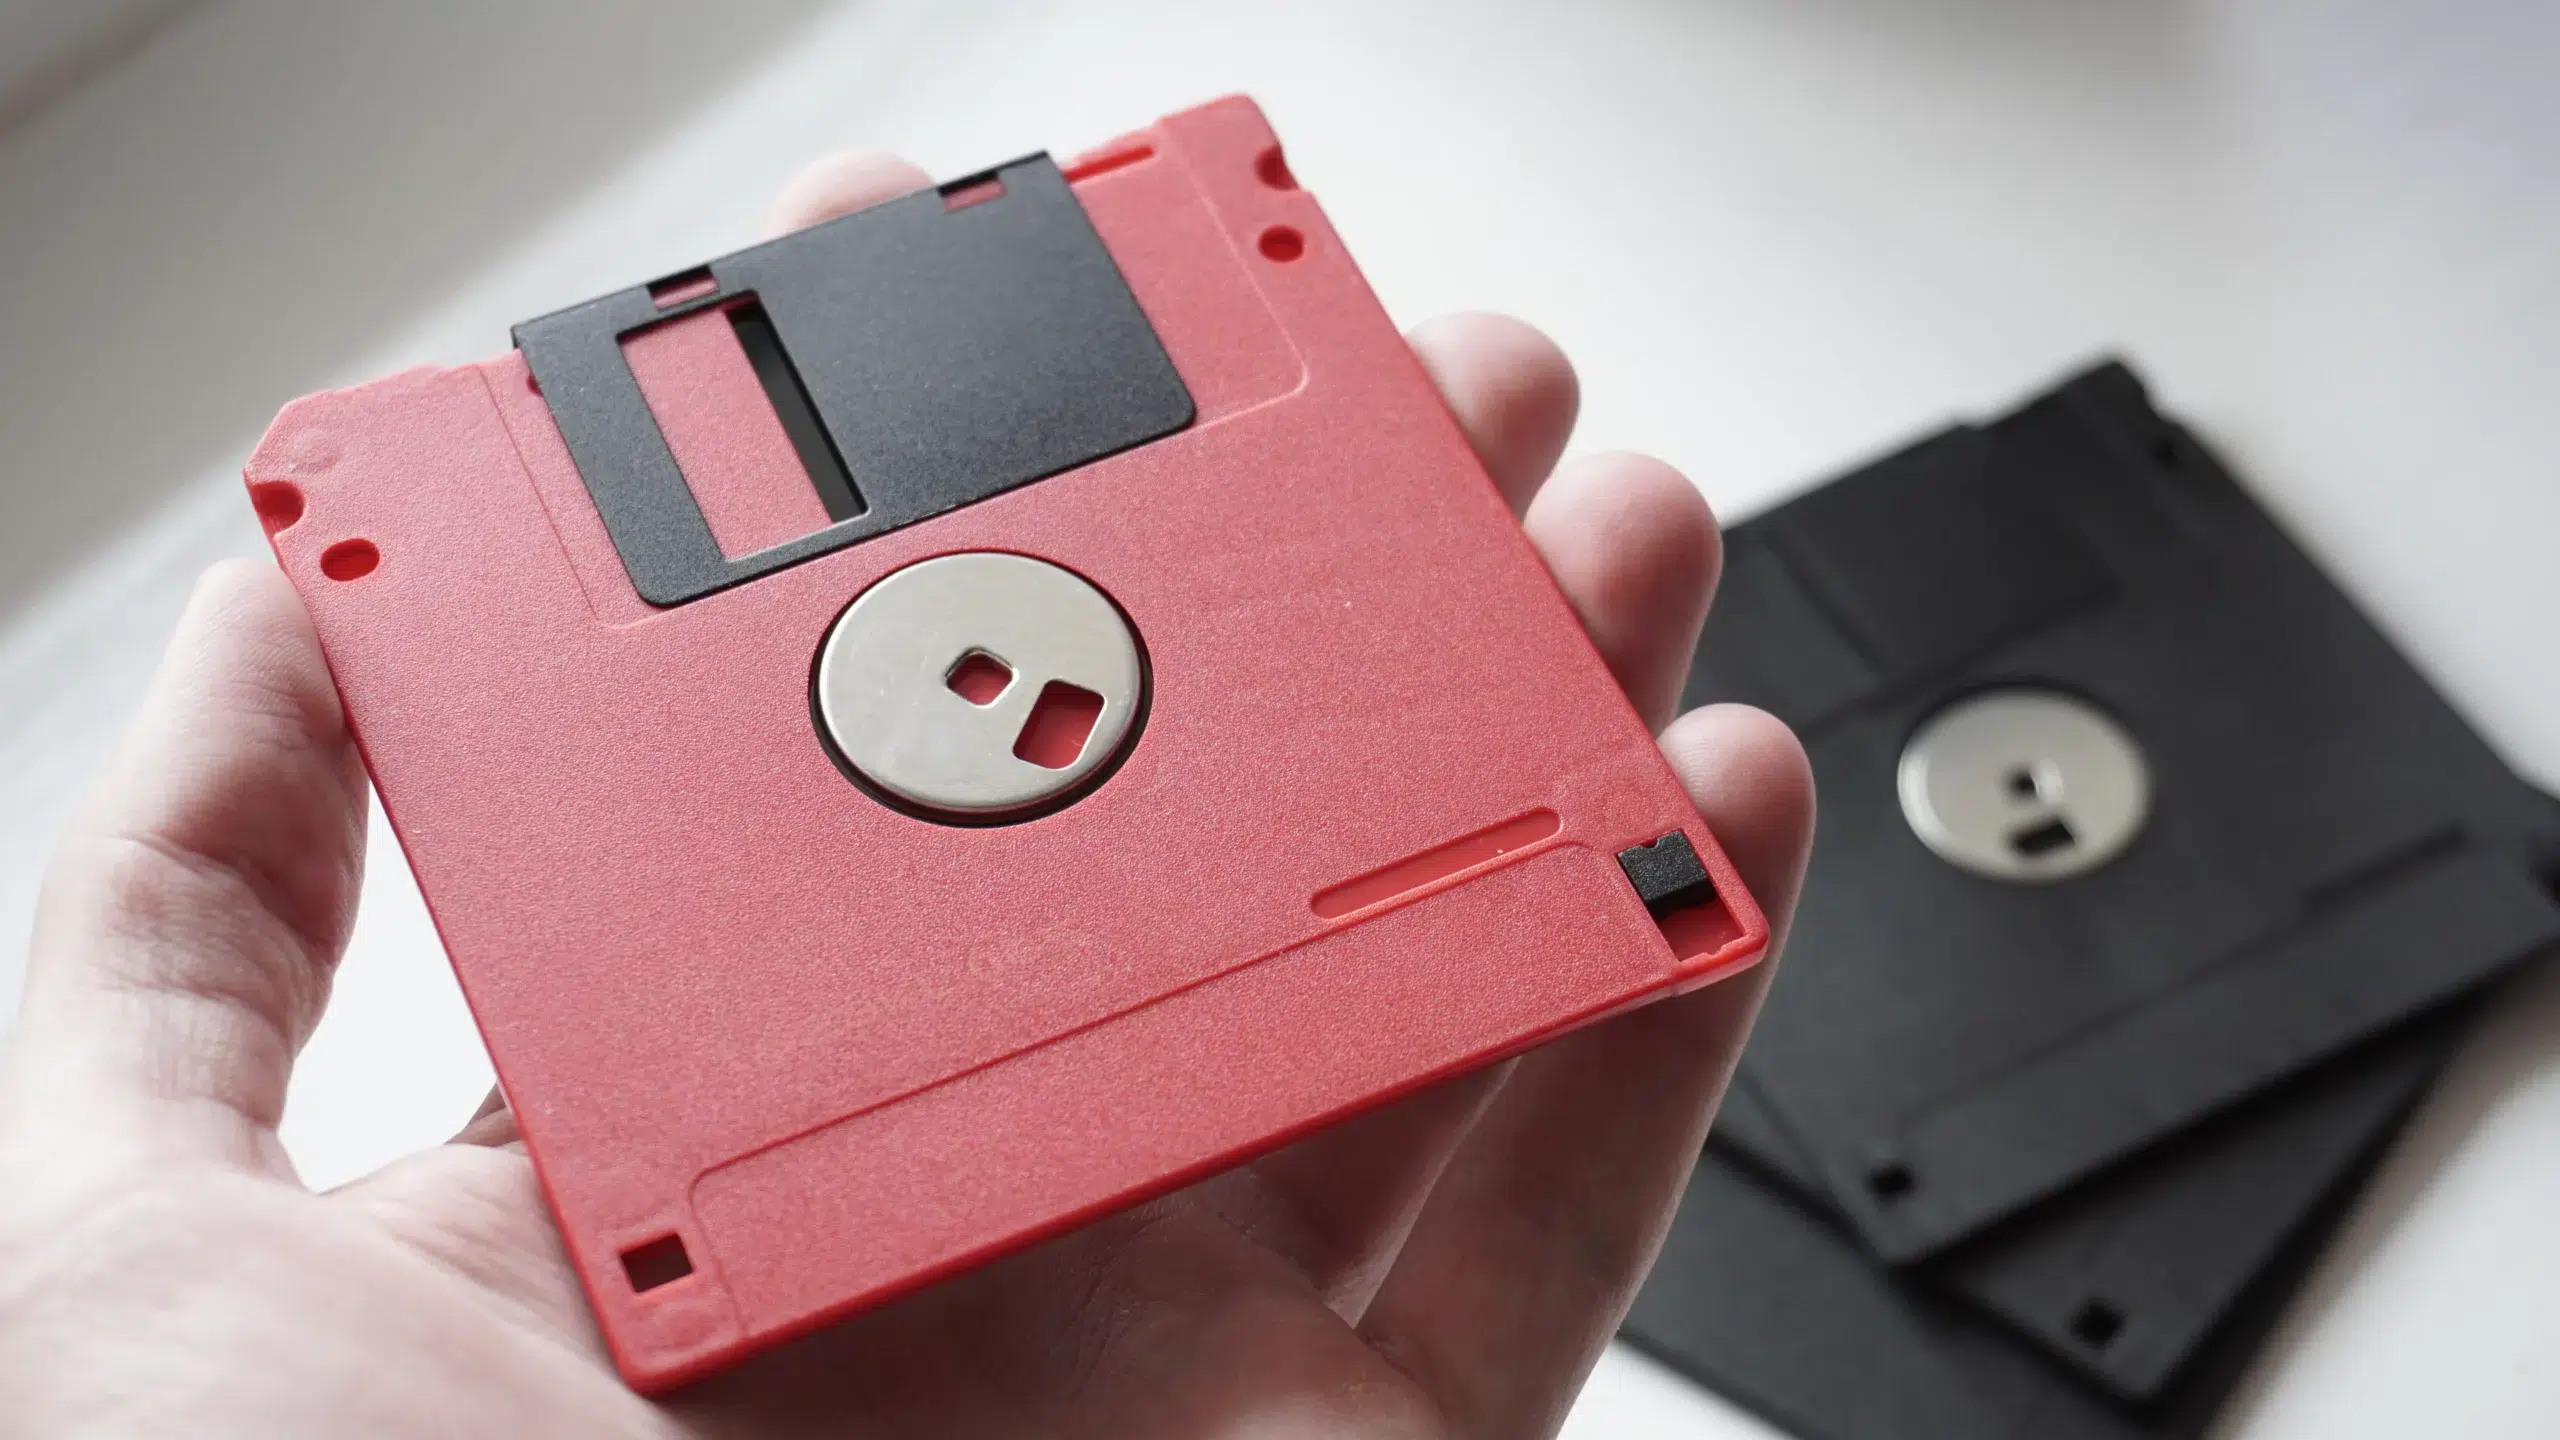 Floppy disk for storing information